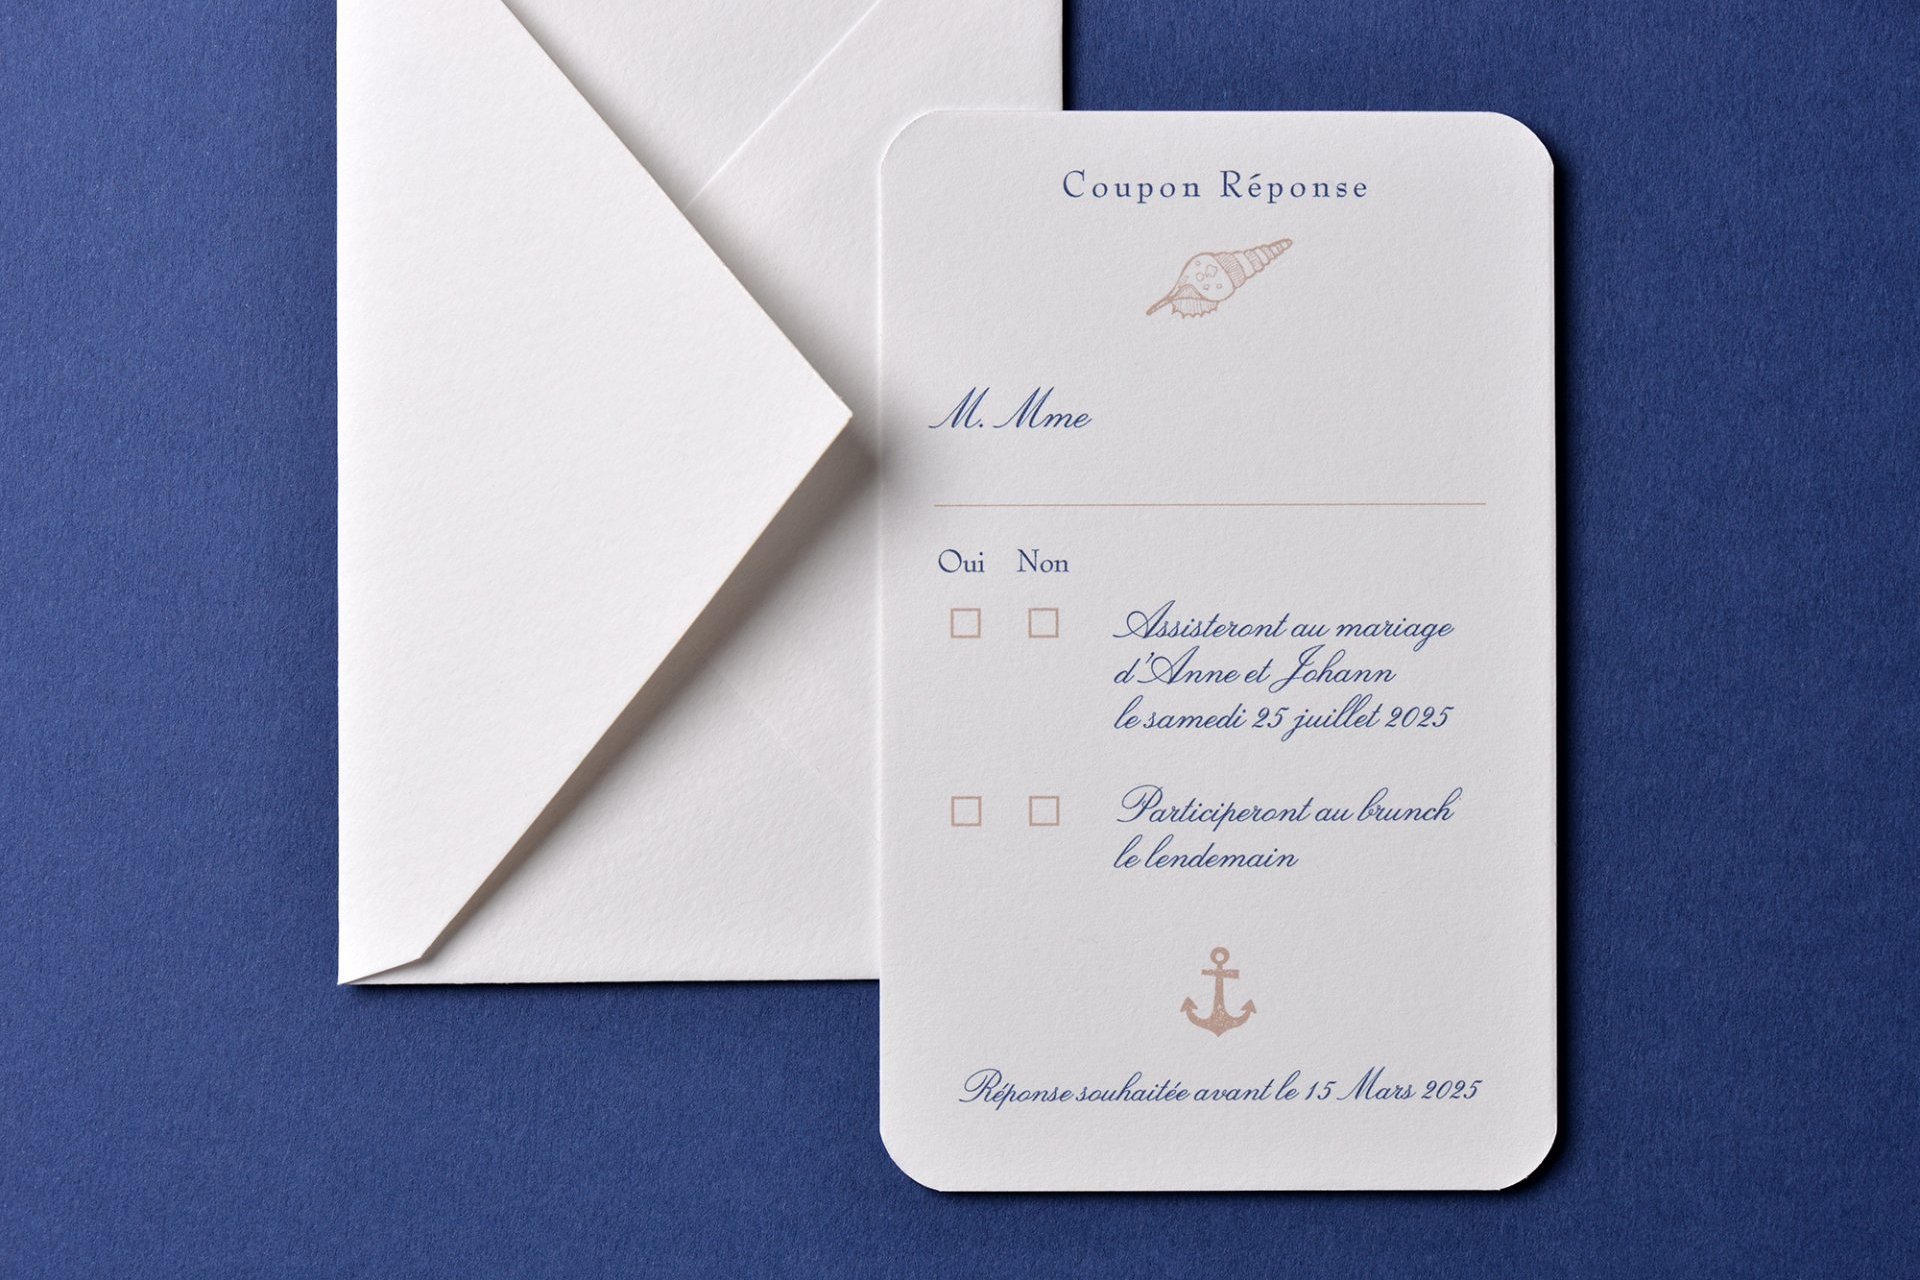 Coupon-Réponse / 135 x 85 mm / Passport Bleu Roi Anne & Johann